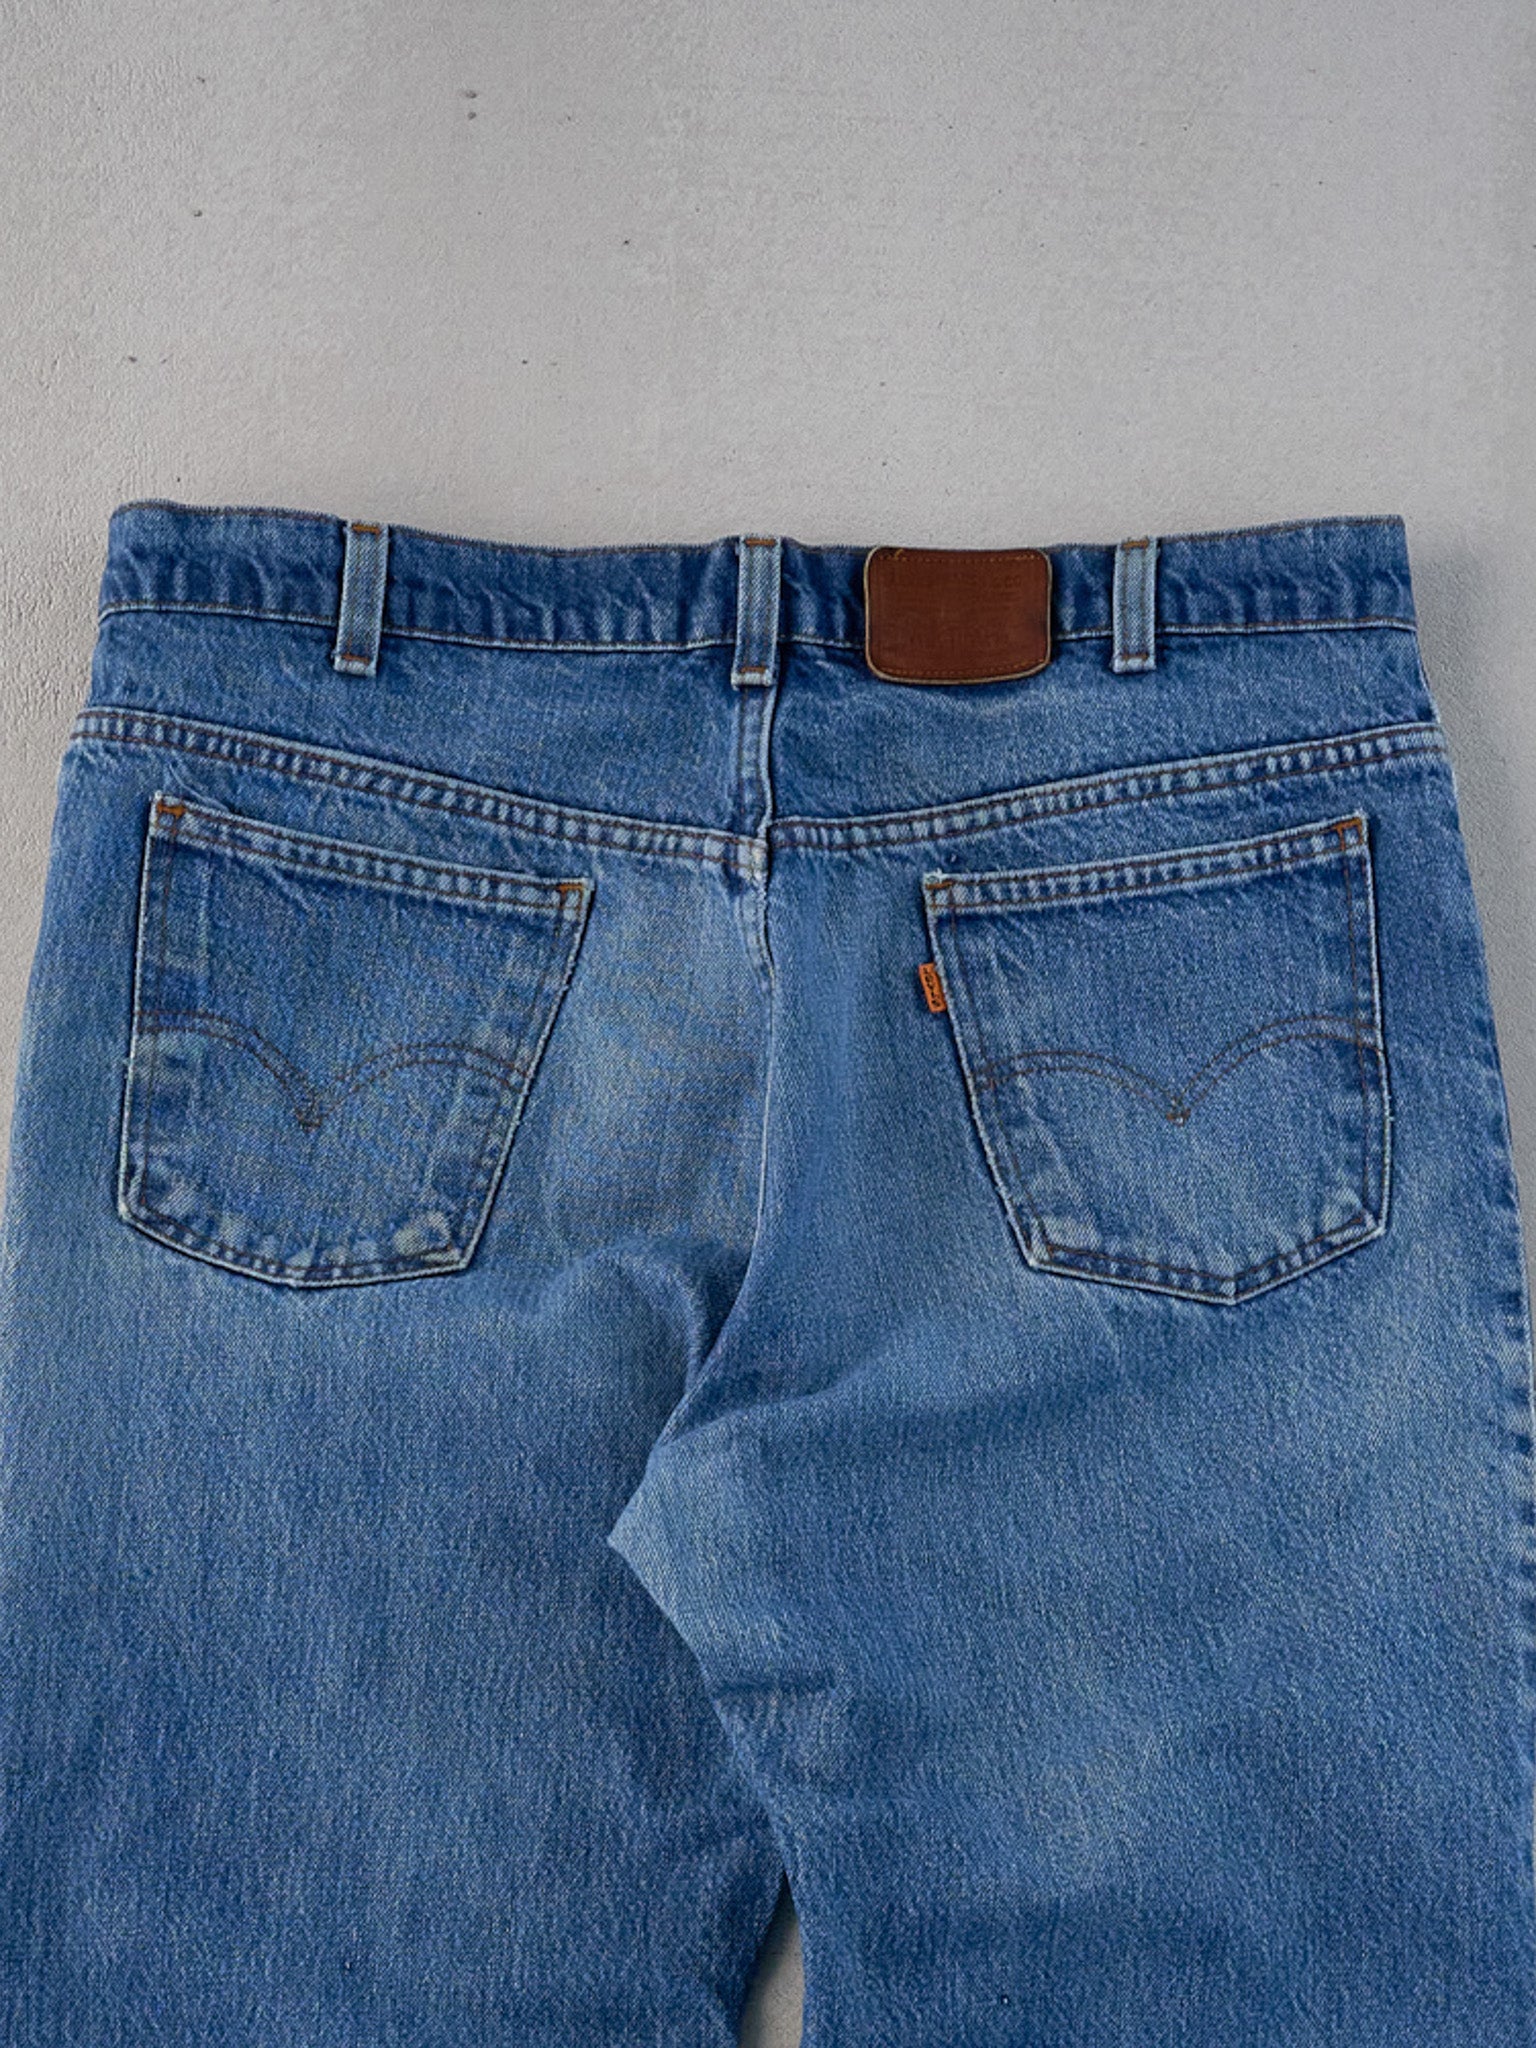 Vintage 70s Dark Blue Levi's 506 Denim Jeans (36x29)